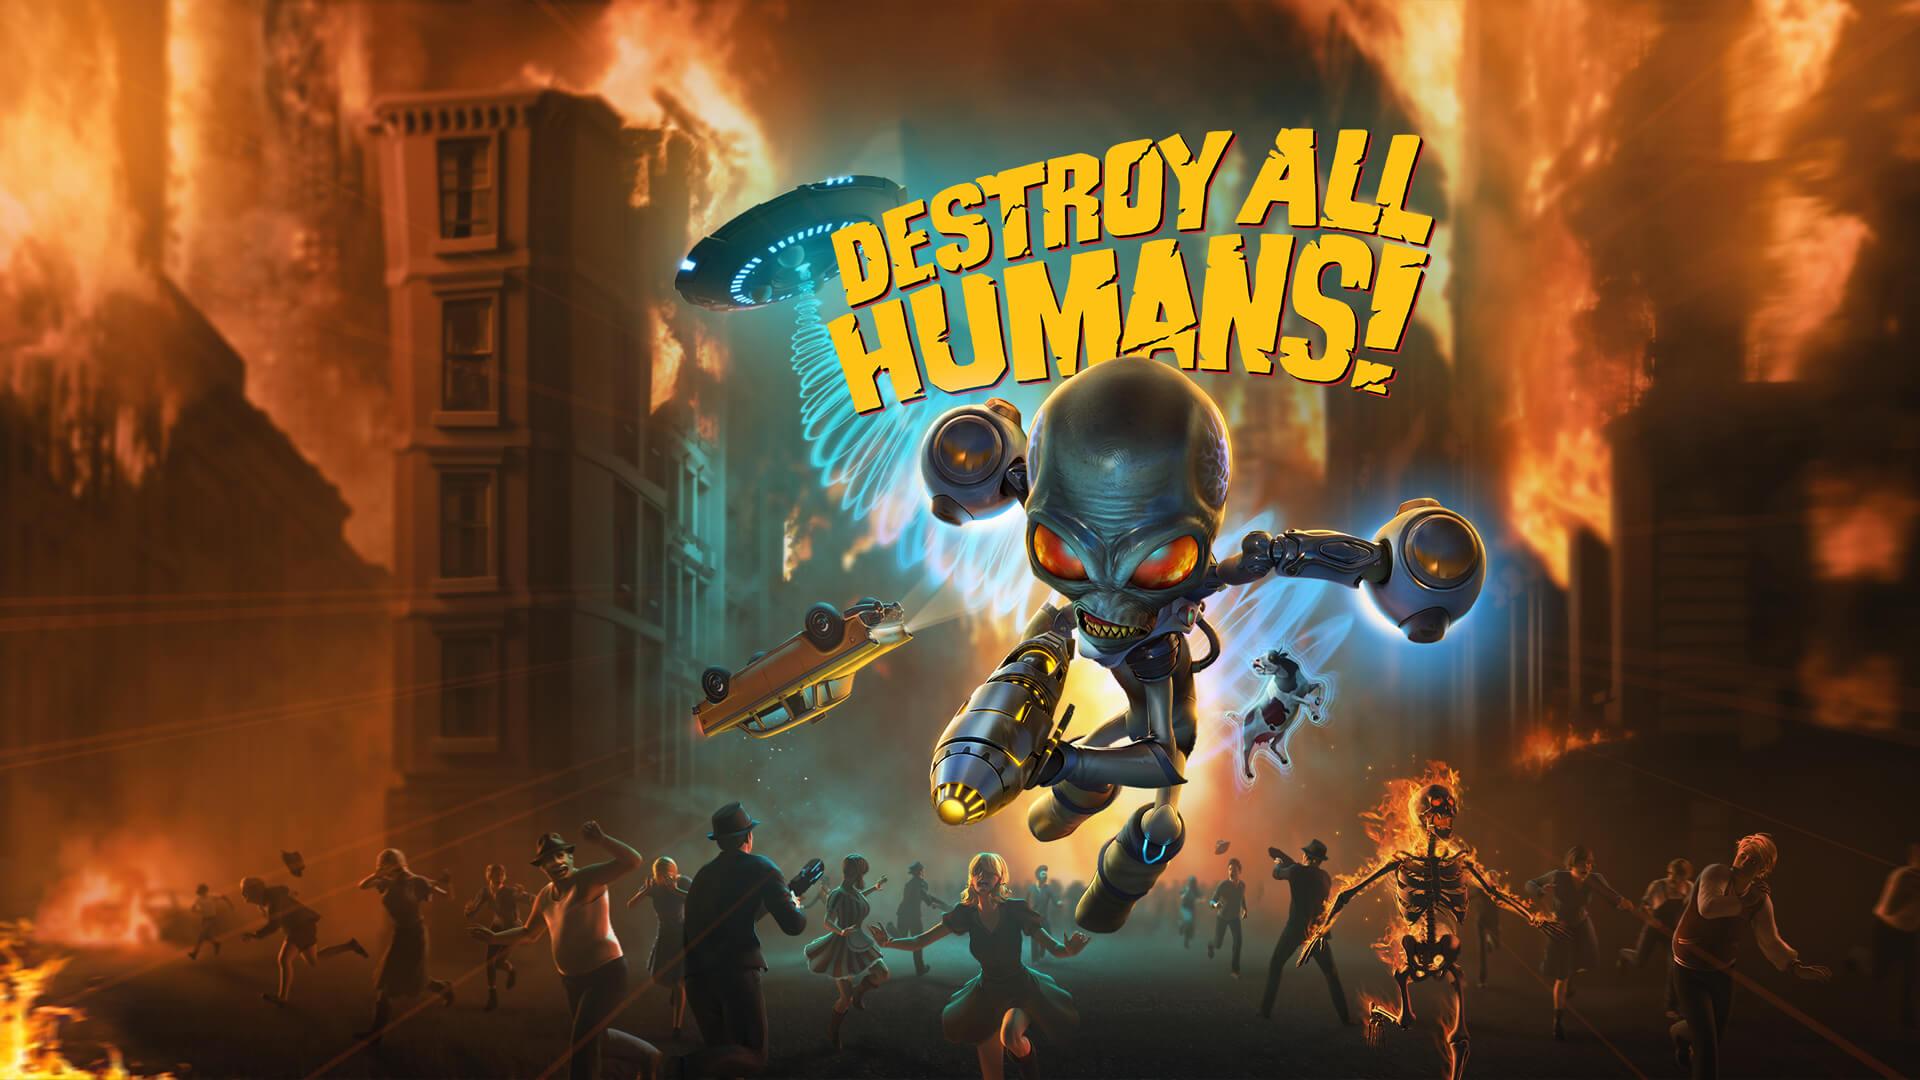 Destroy All Humans! ฉบับรีเมกเตรียมลง Nintendo Switch 29 มิ.ย. นี้